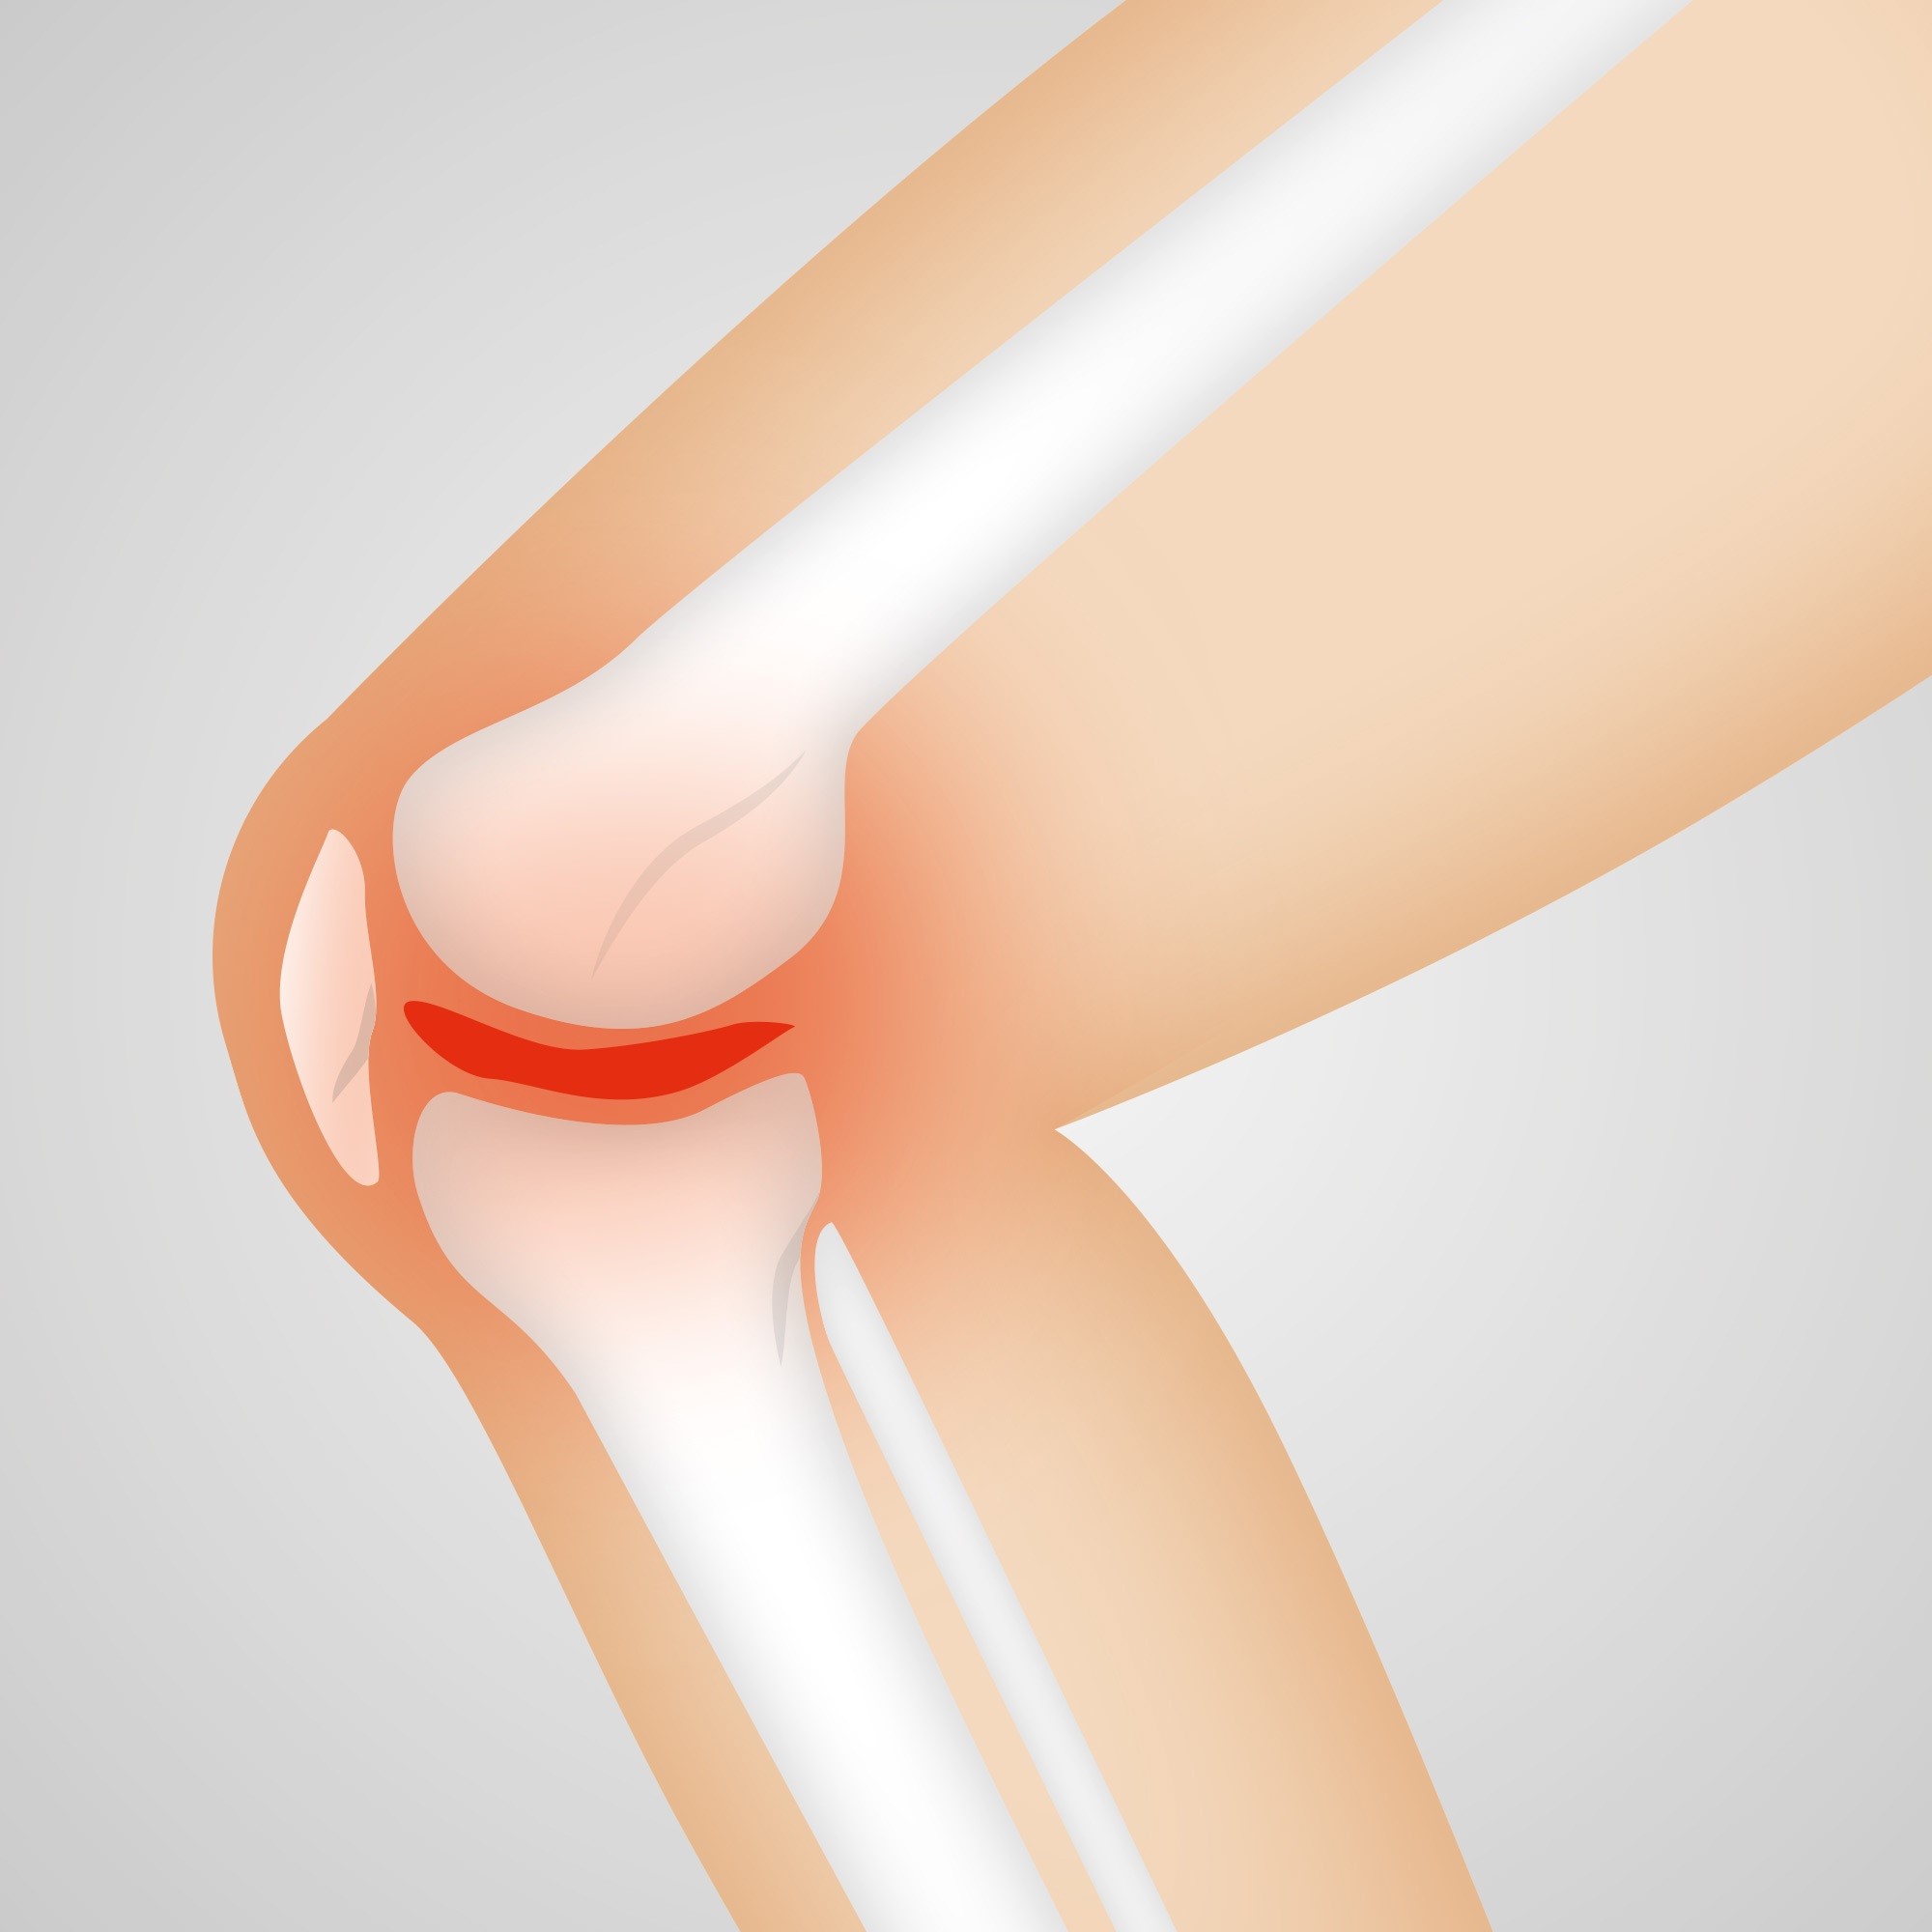 inlamed knee